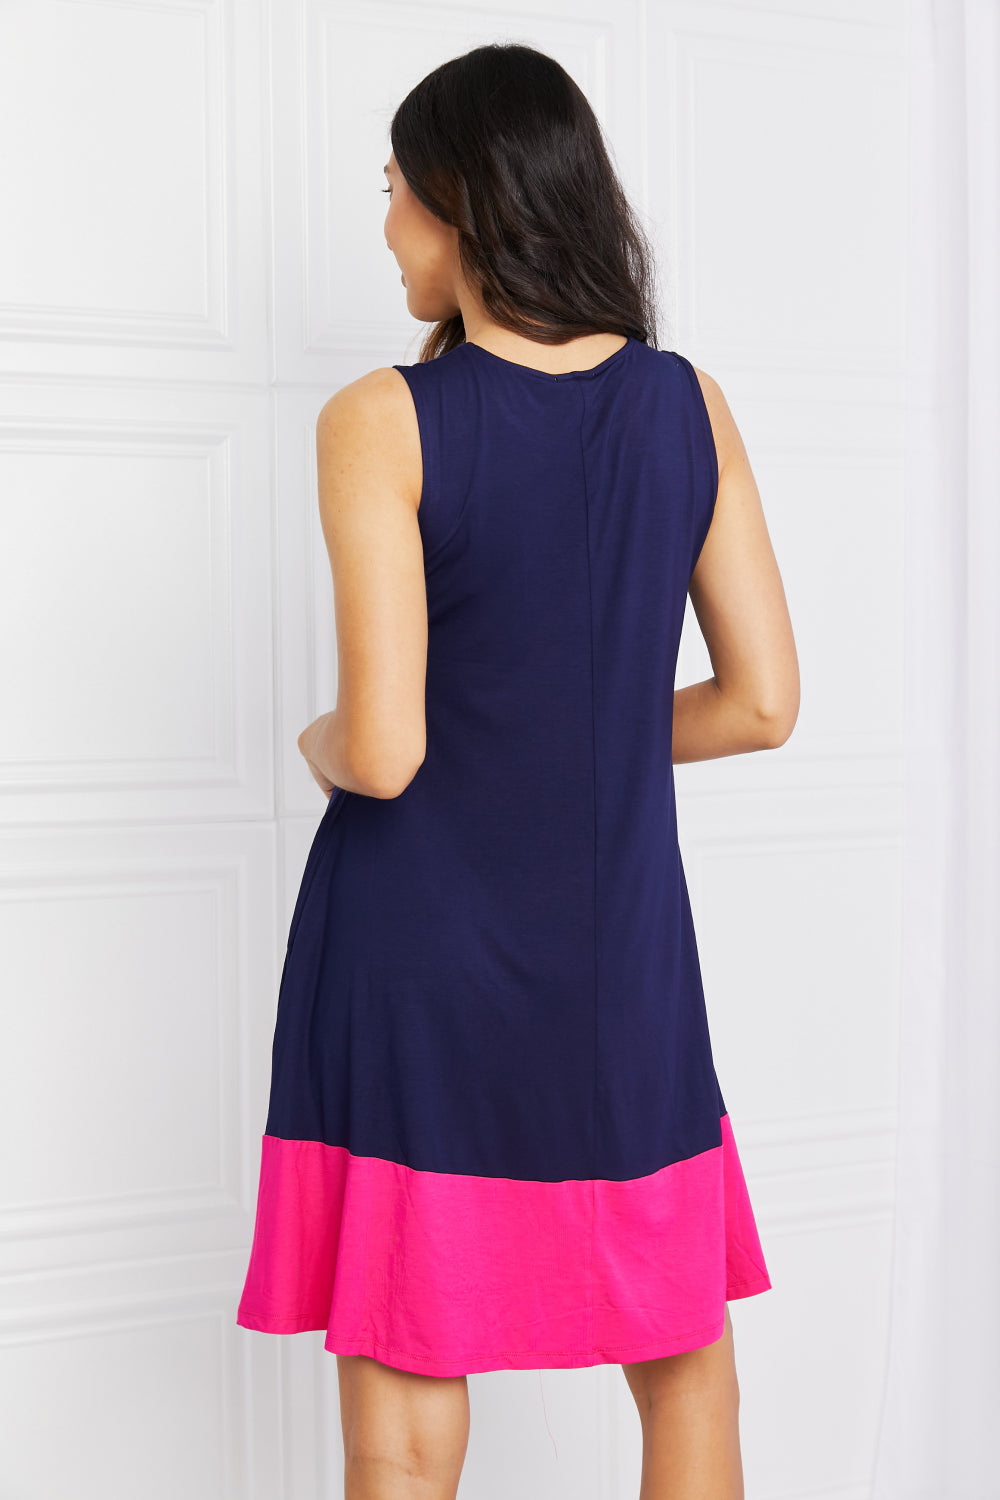 Yelete Full Size Two-Tone Sleeveless Mini Dress with Pockets  | KIKI COUTURE-Women's Clothing, Designer Fashions, Shoes, Bags